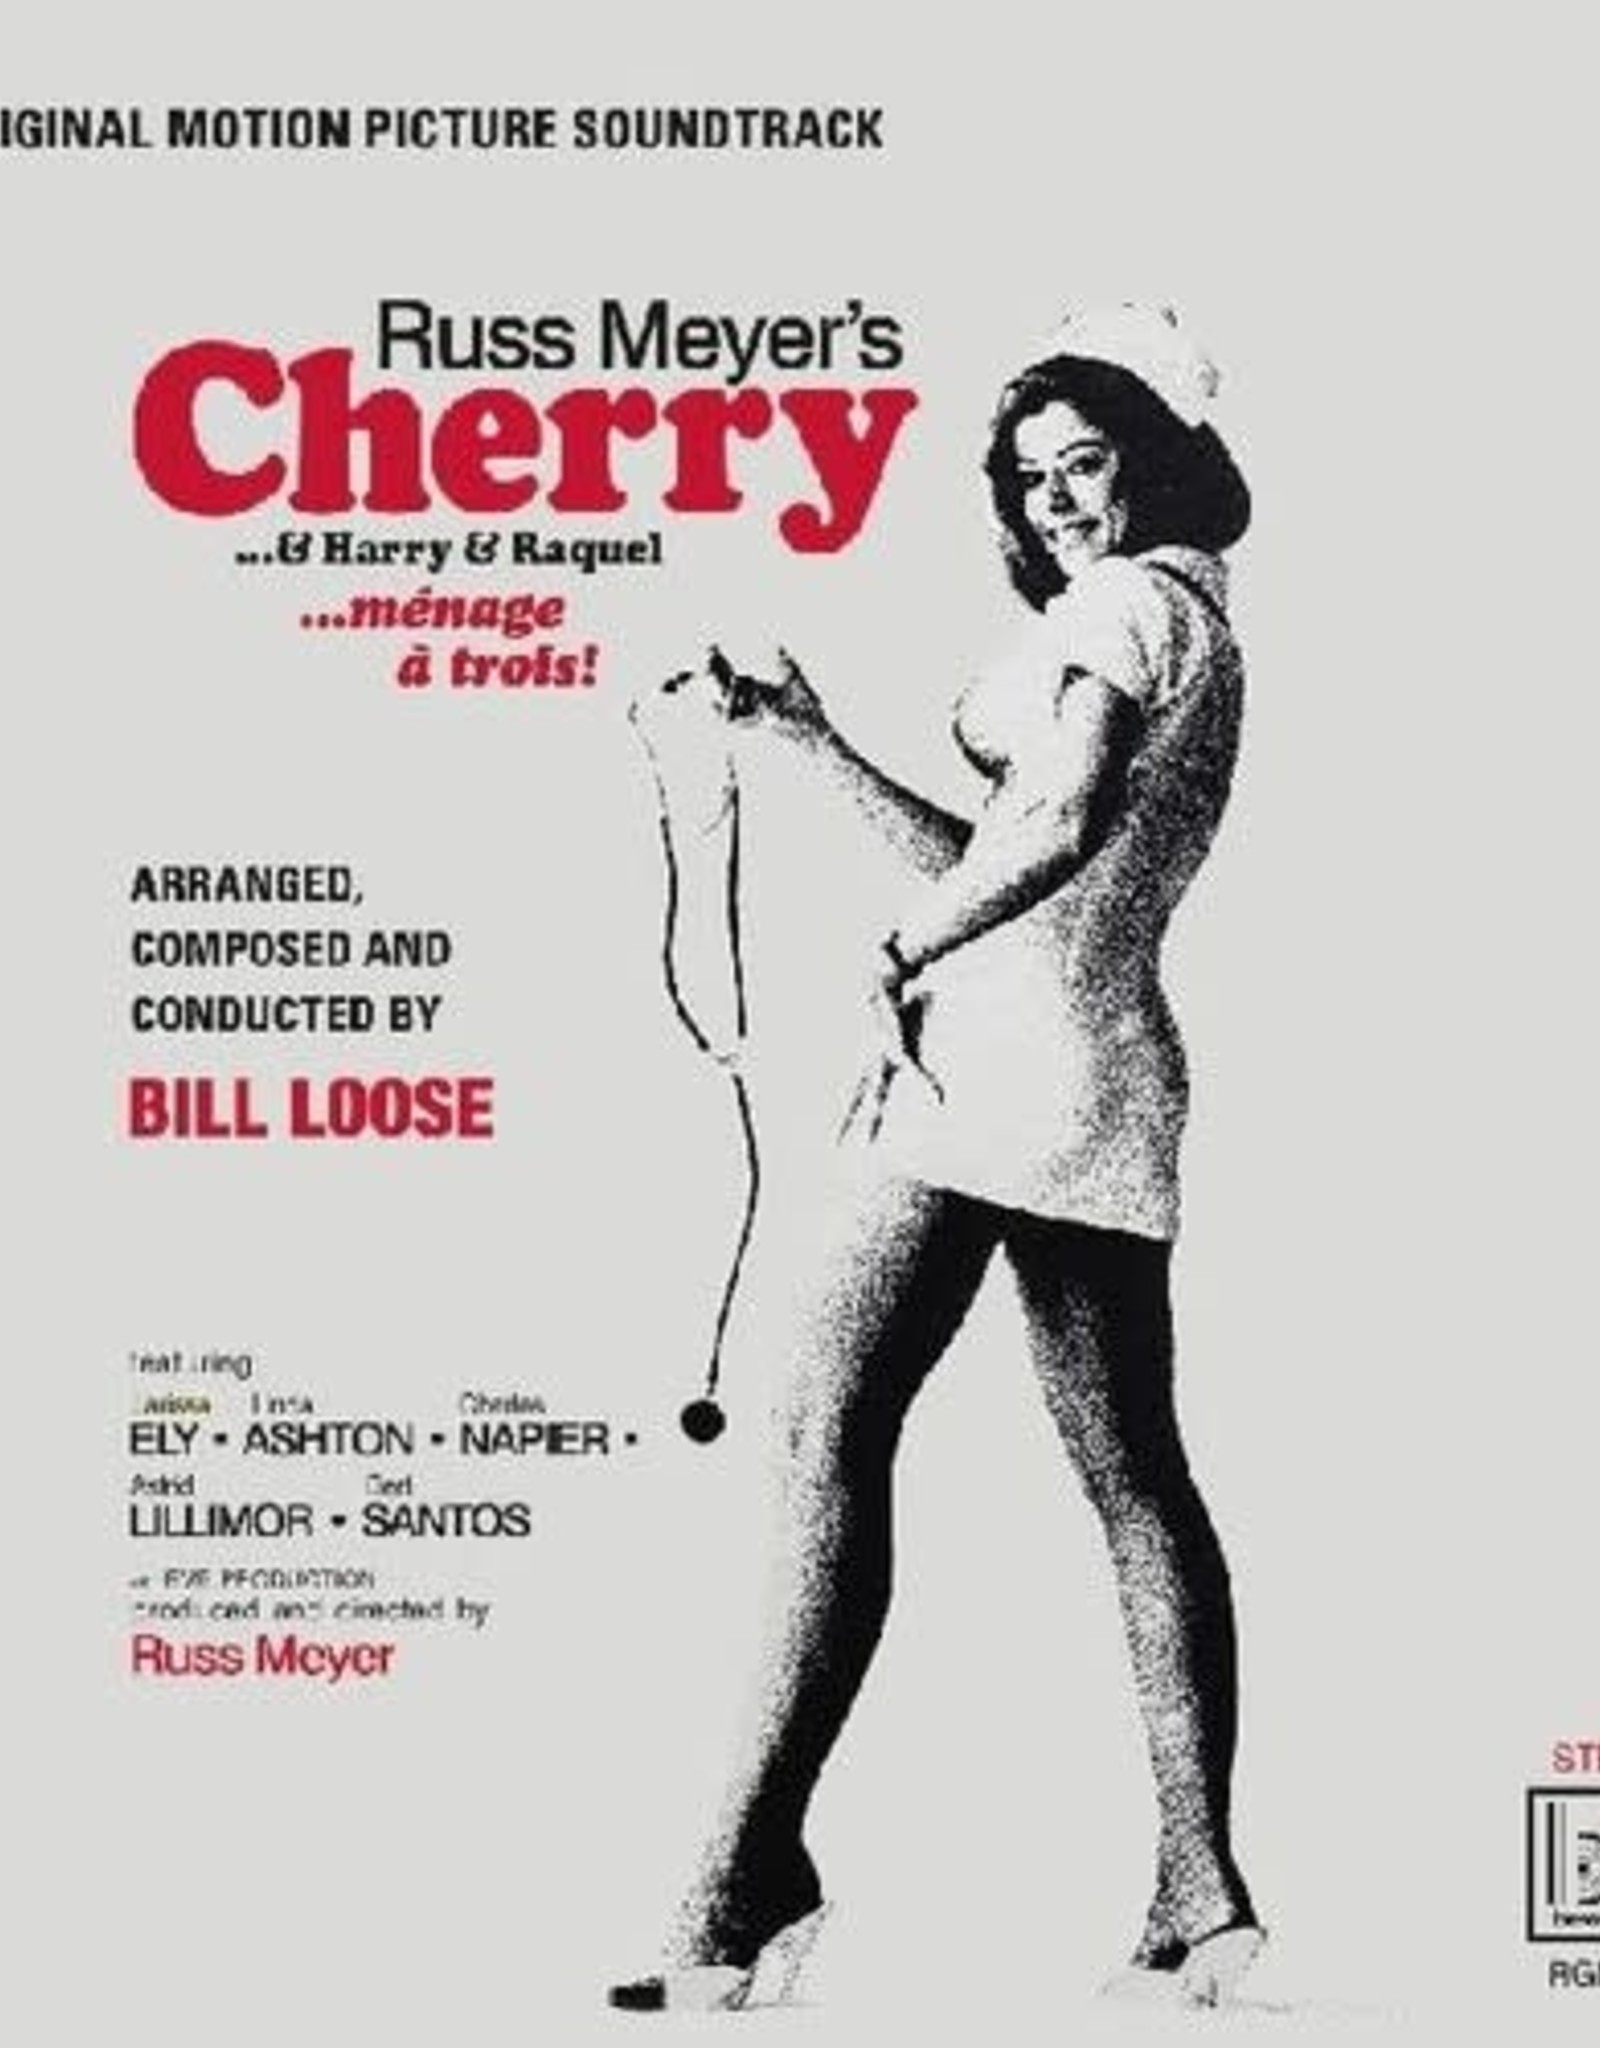 Bill Loose - Russ Meyer's "Cherry" Soundtrack